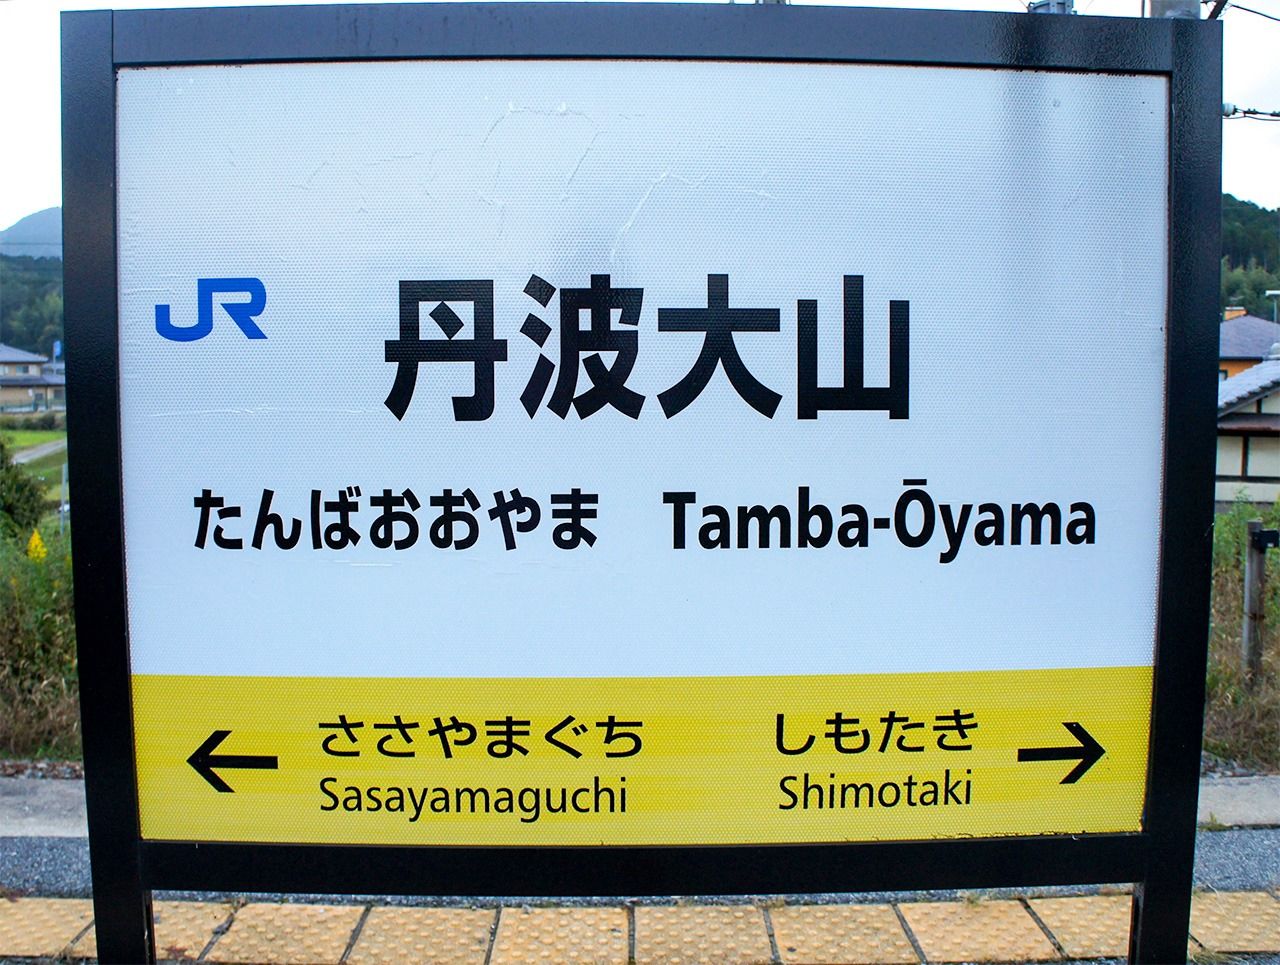 A train station sign displaying “Tamba” in Hepburn spelling. (© Pixta)